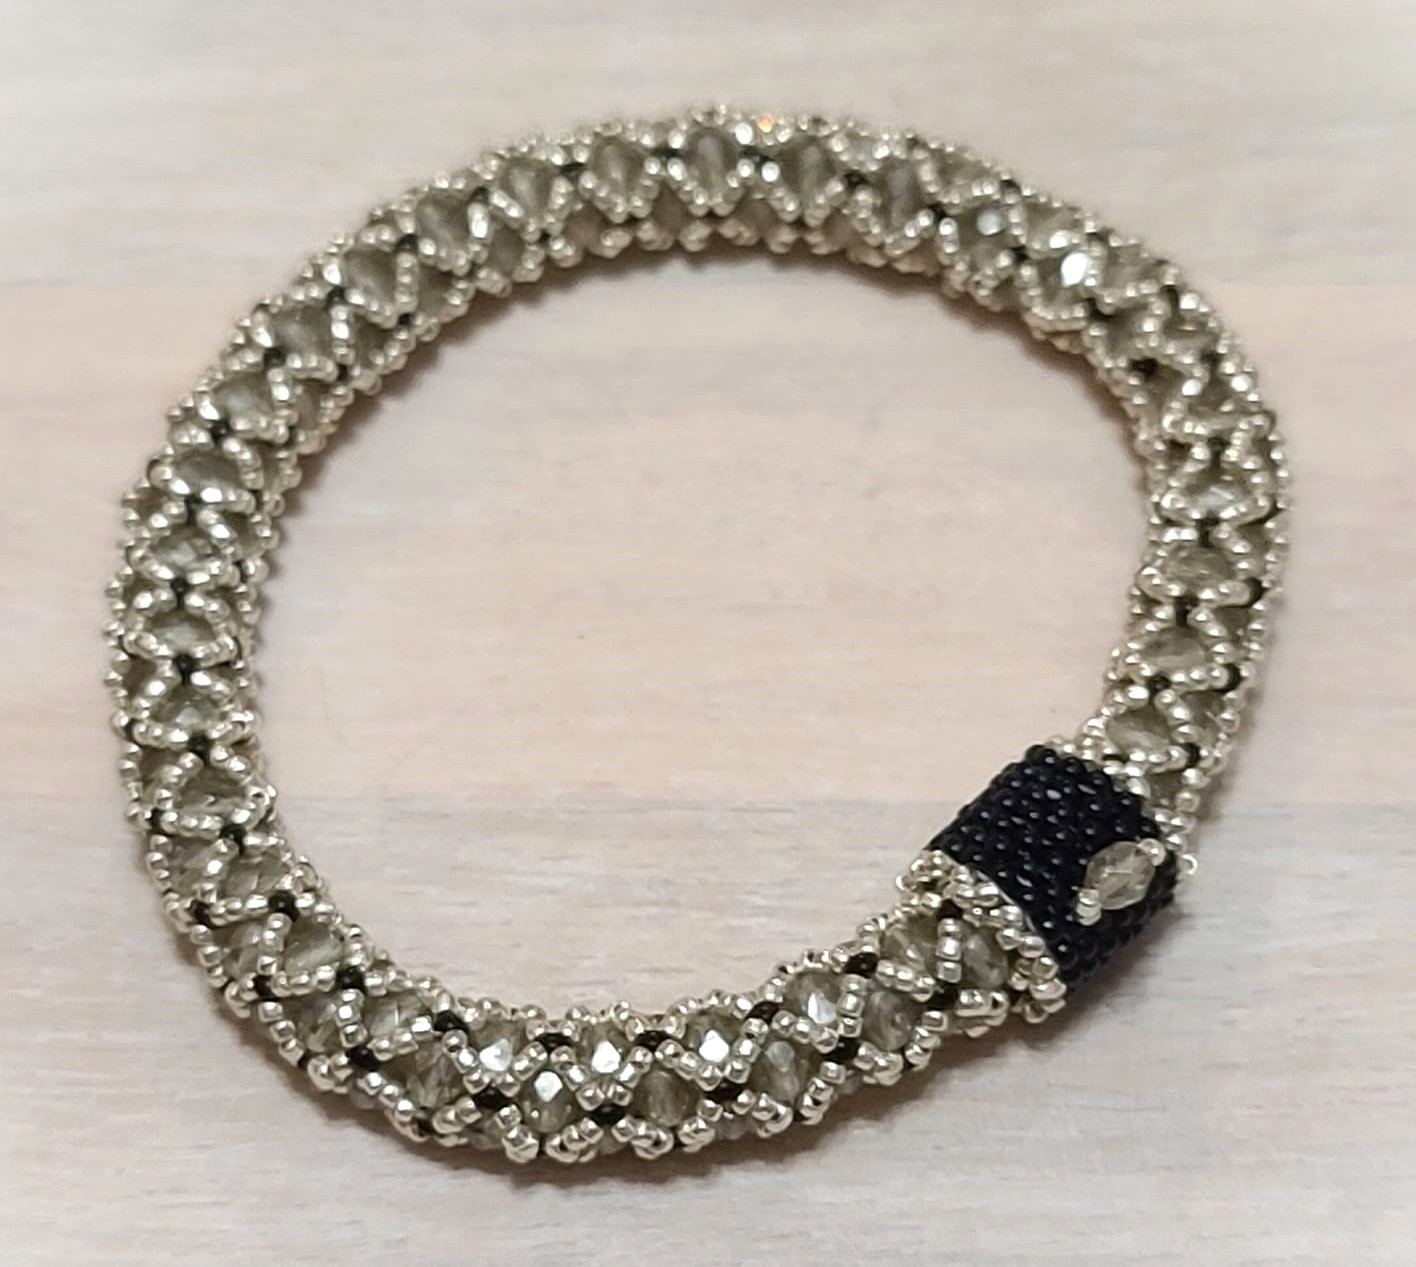 Silver crystal bracelet, bangle stye, handcrafted, miyuki glass